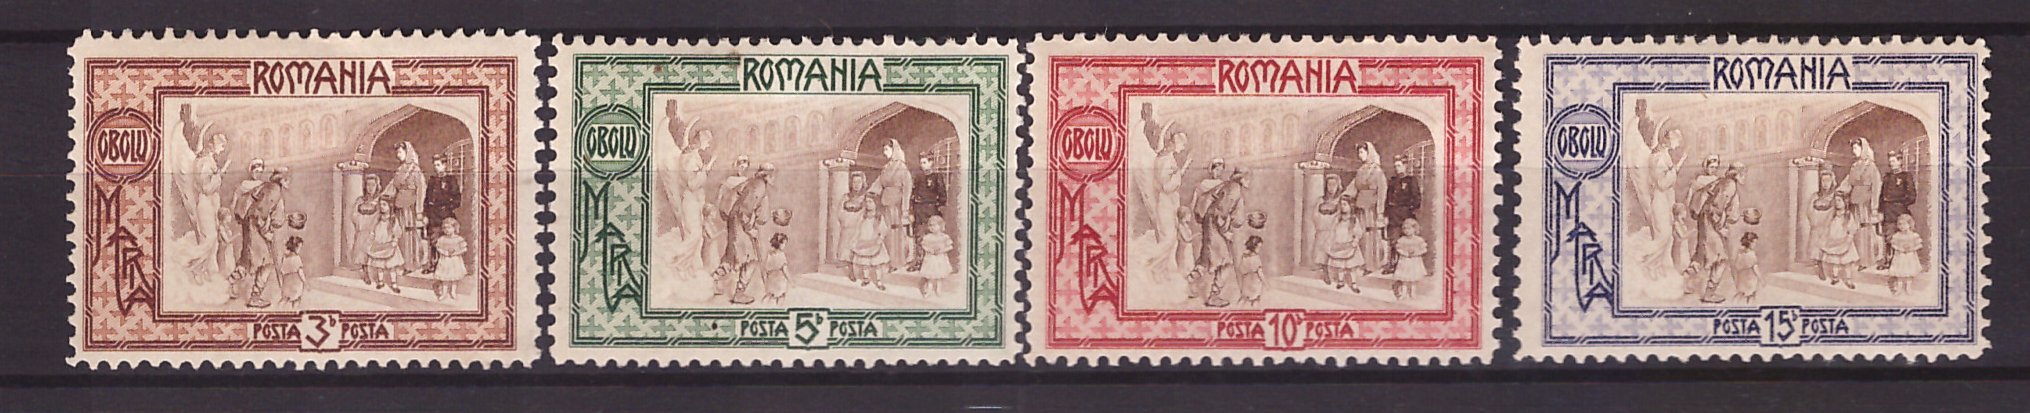 1907 - Obolu, serie nestampilata, cu sarniere